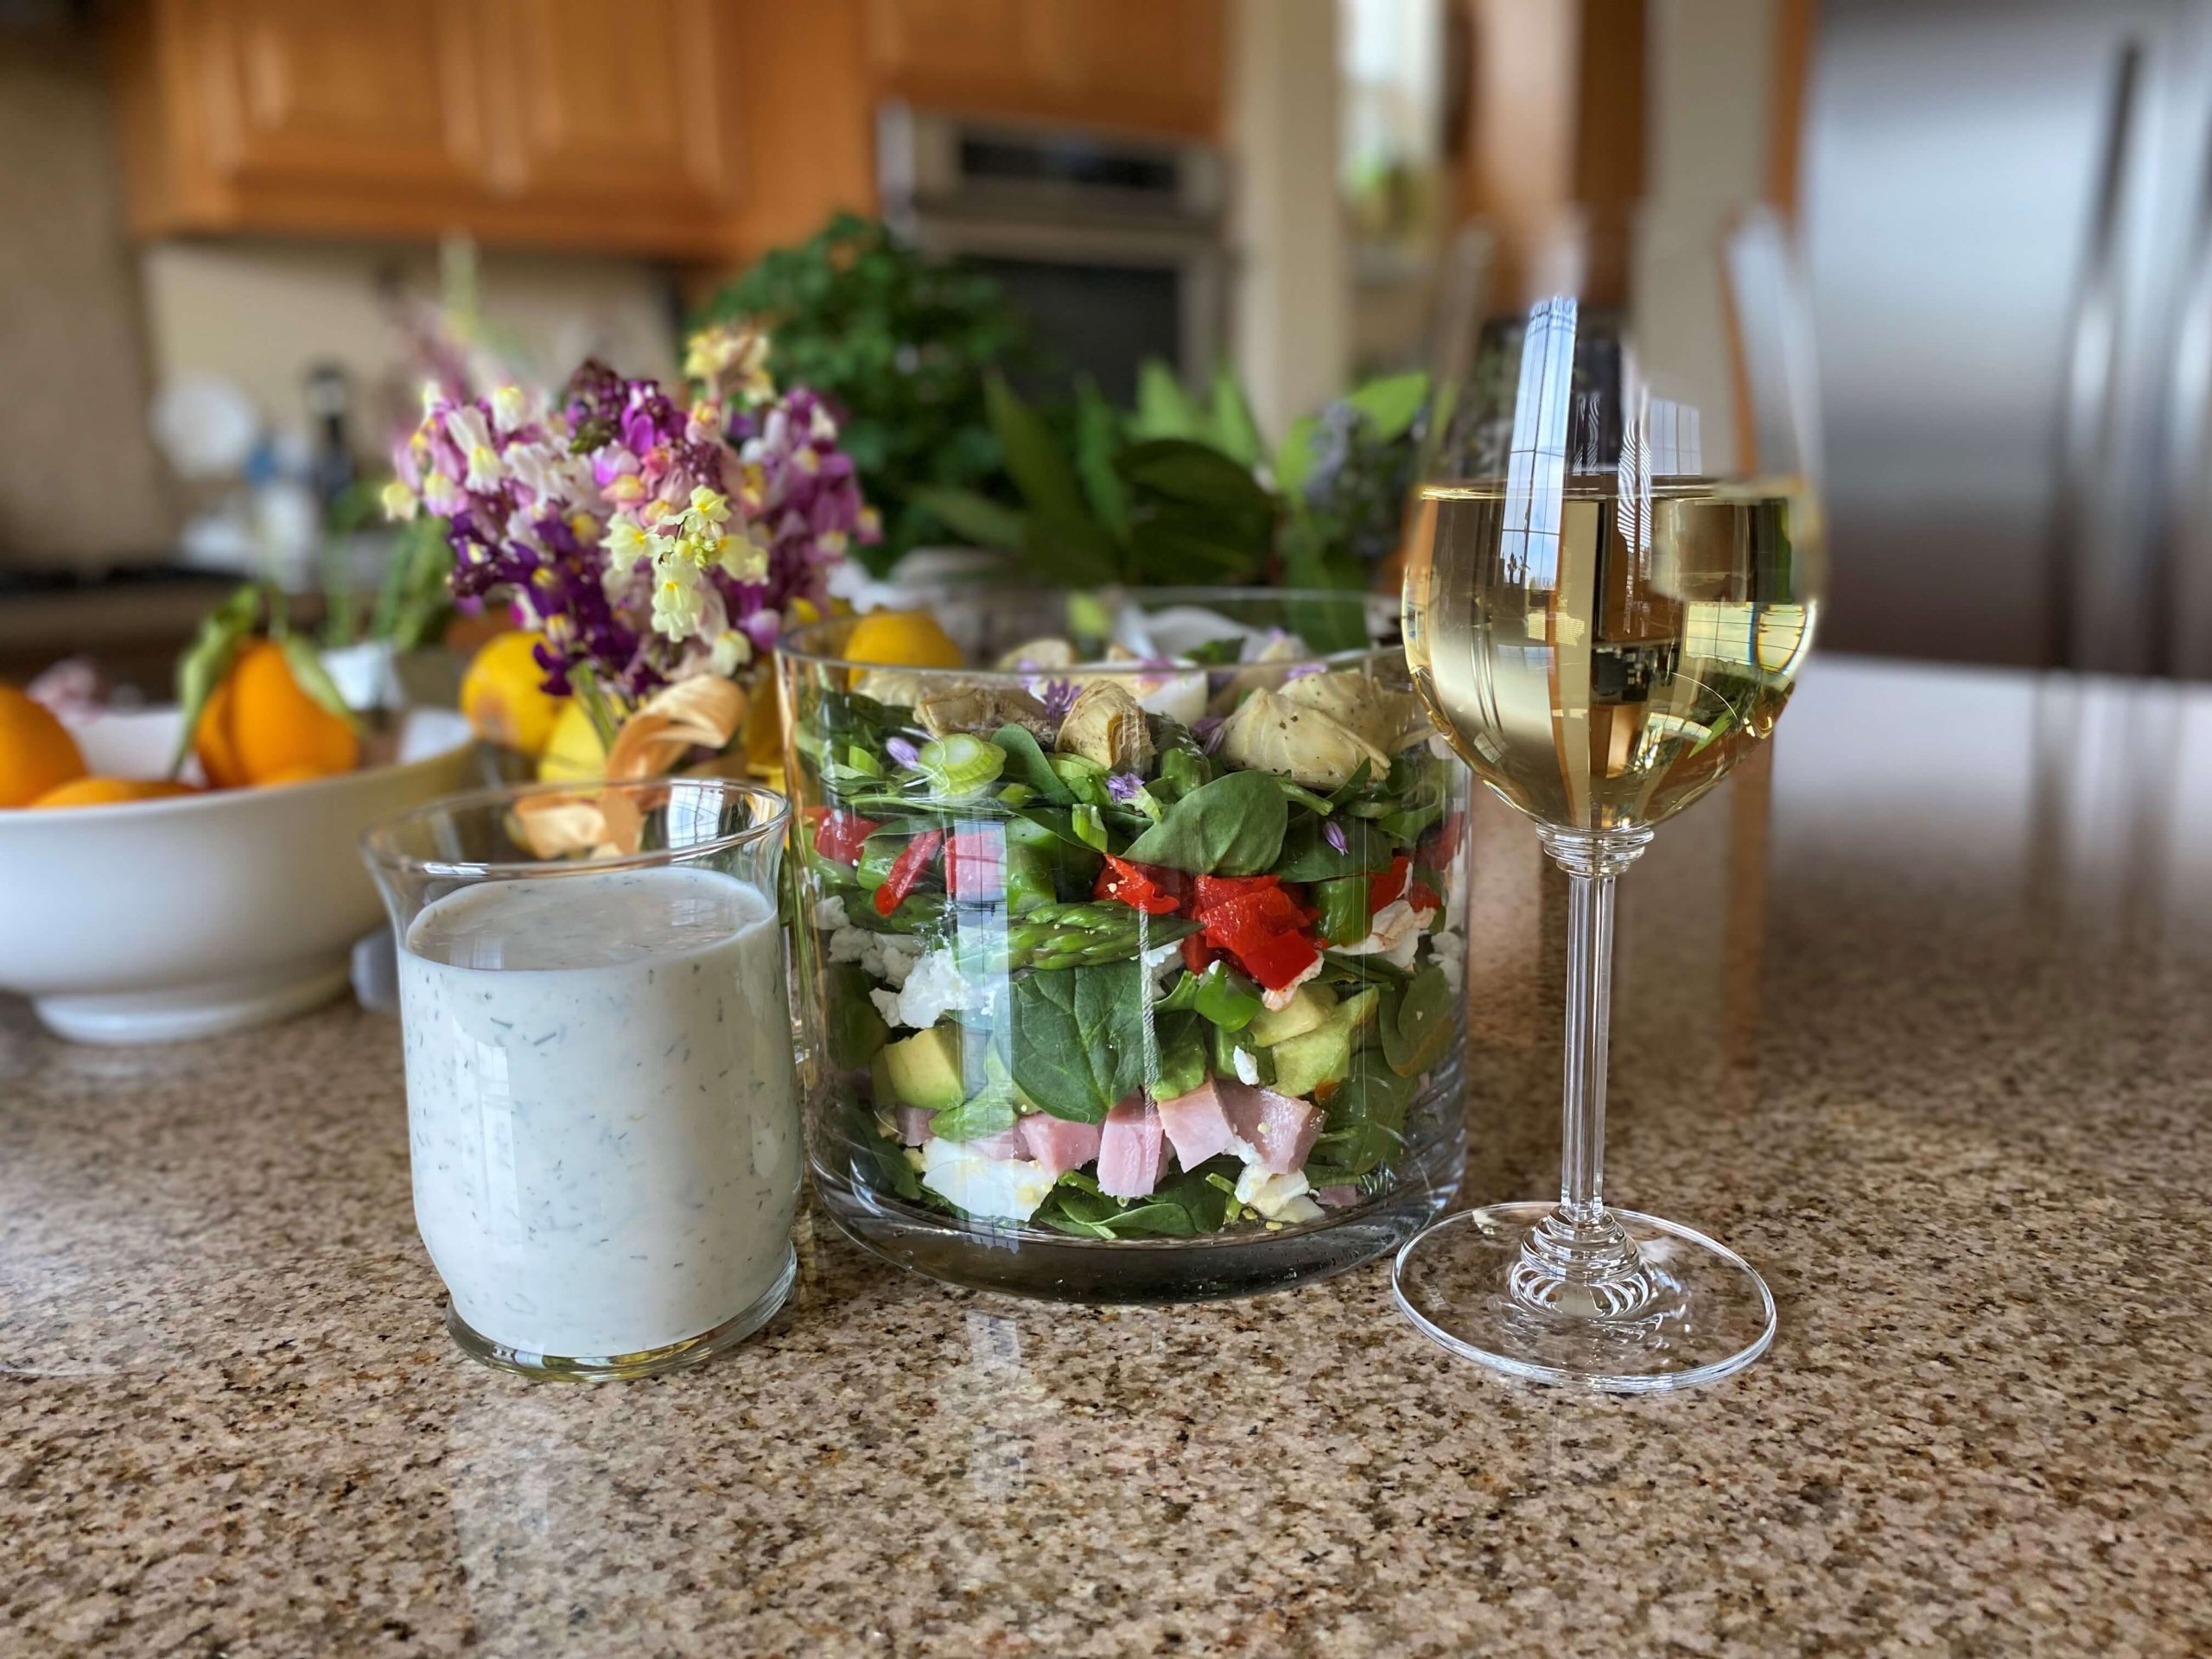 California Cobb Salad with Creamy Dill Dressing